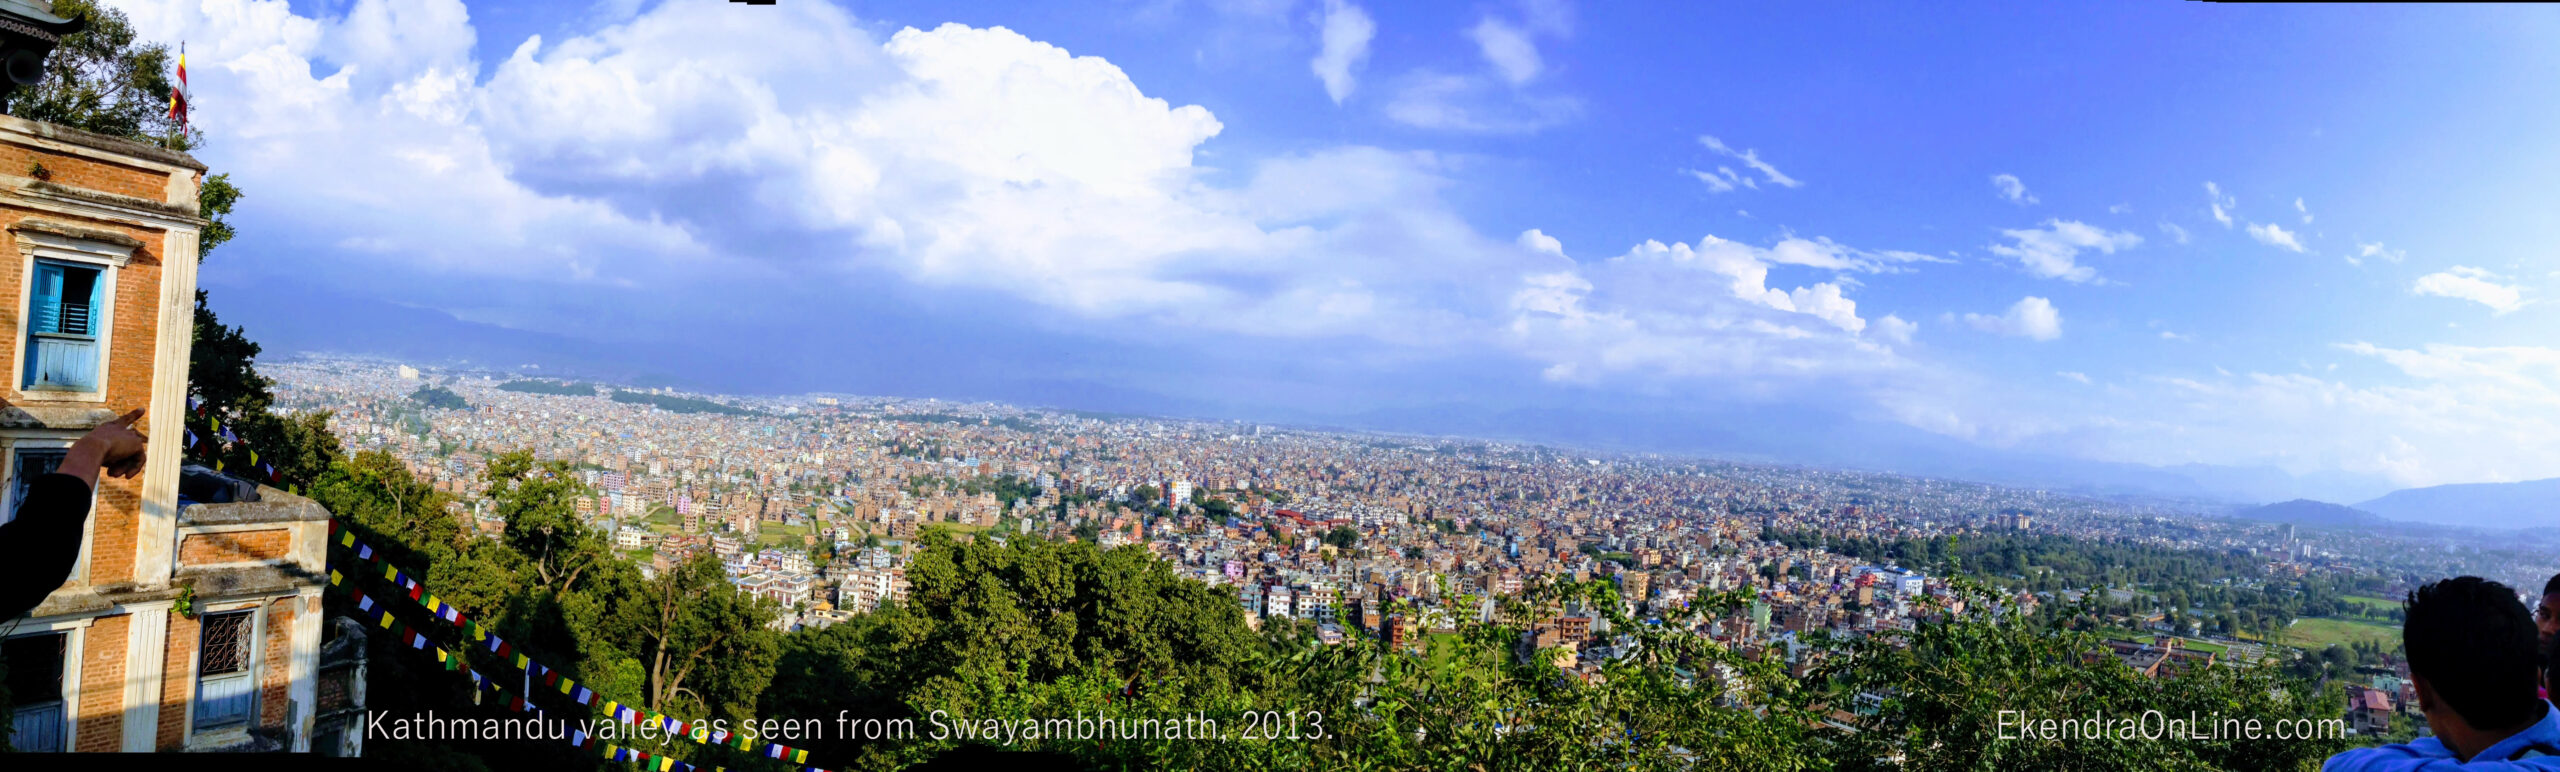 Kathmandu valley as seen from Swayambhunath, 2013.